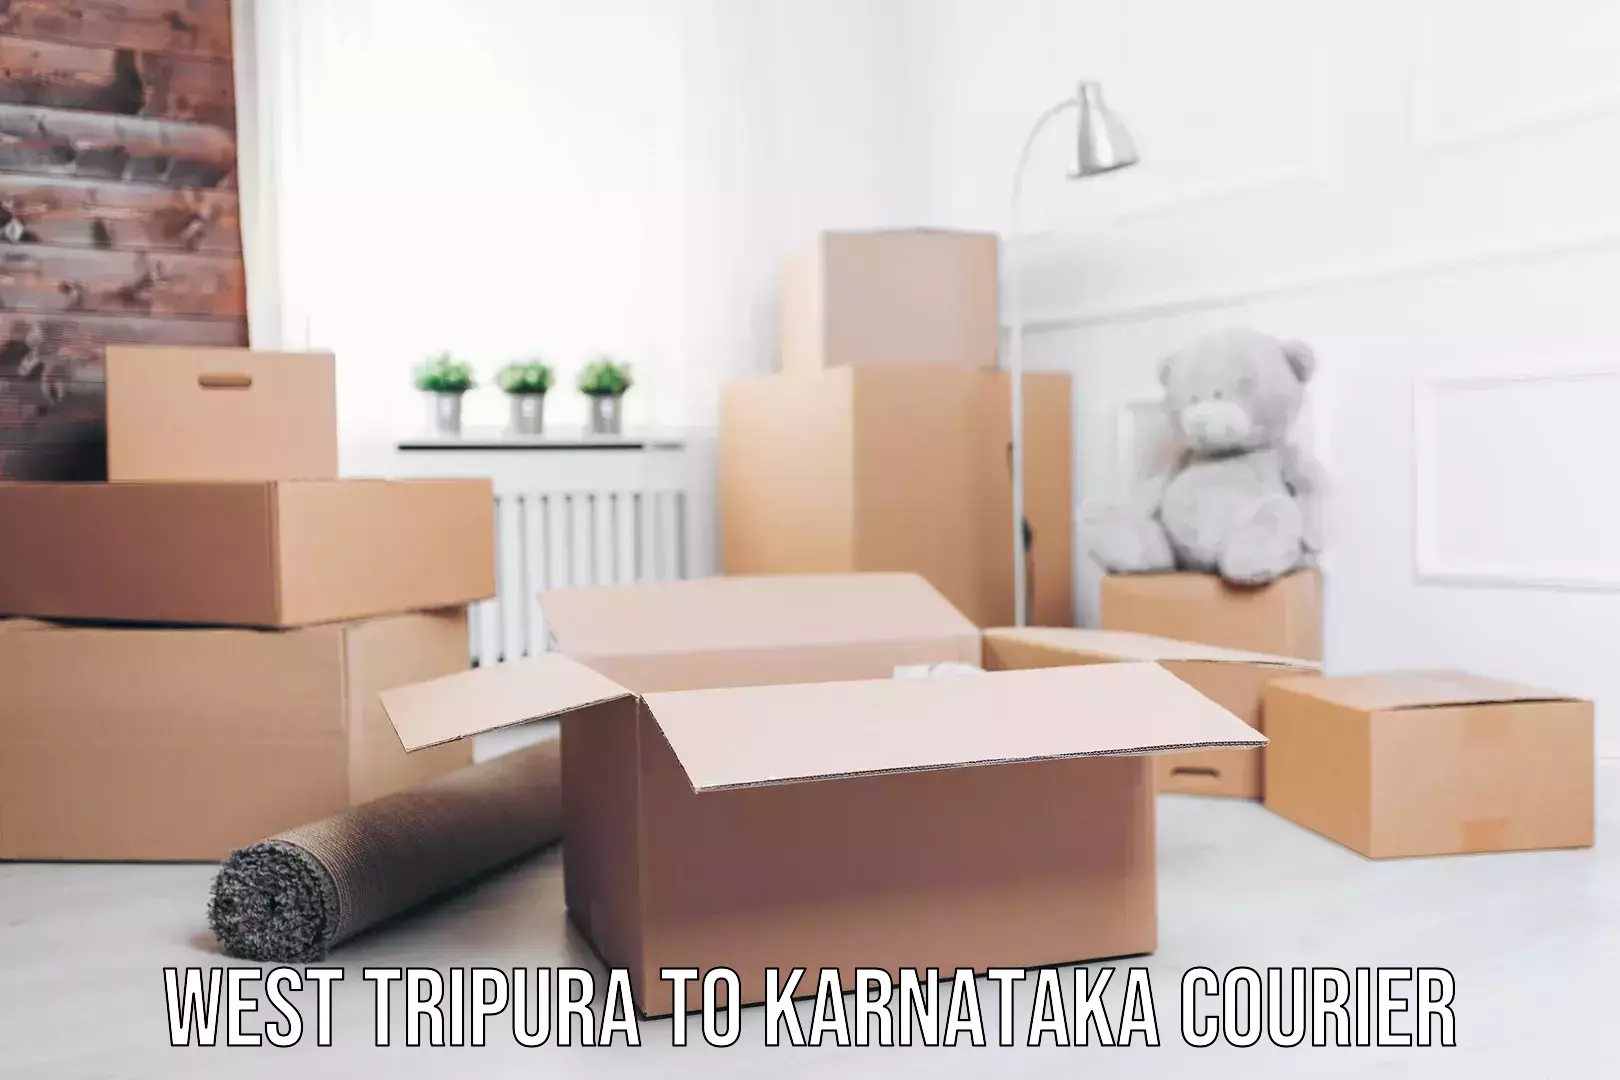 Online package tracking West Tripura to Karnataka